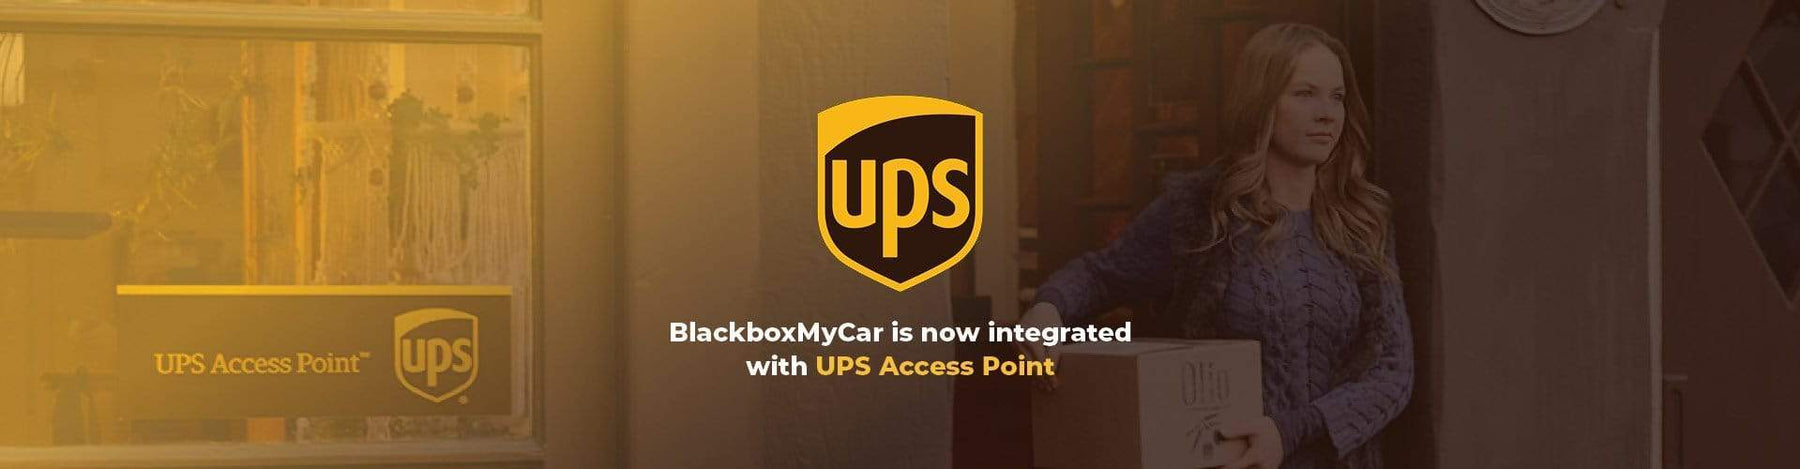 UPS Access Point integration - - BlackboxMyCar